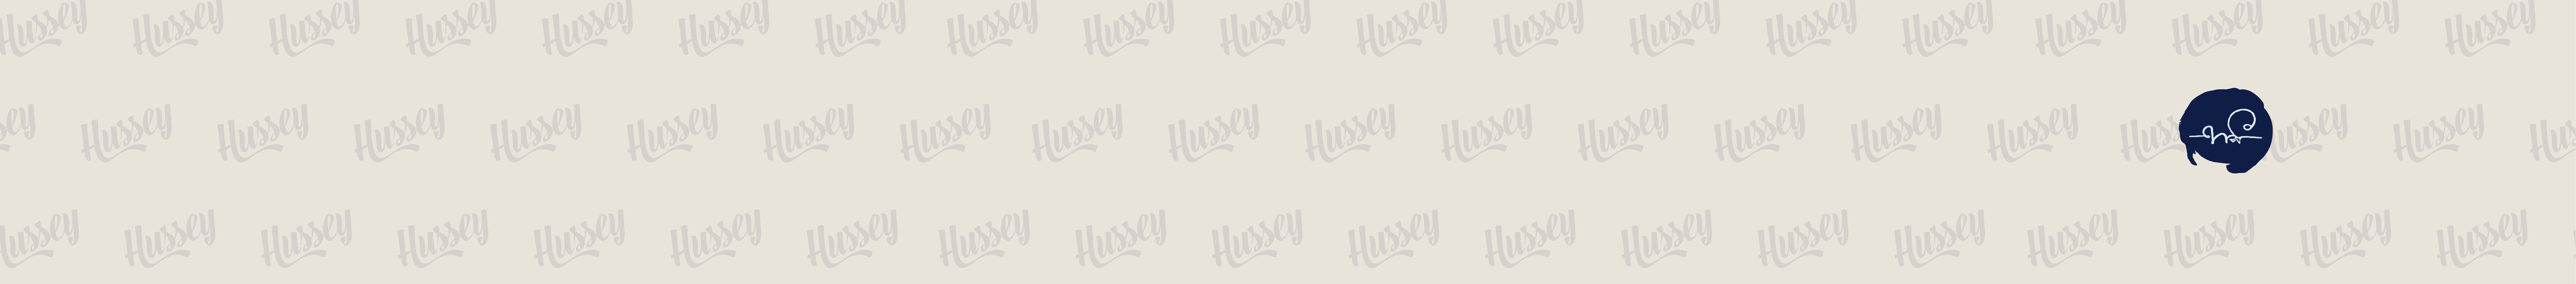 HUSSEY 380s profilbanner